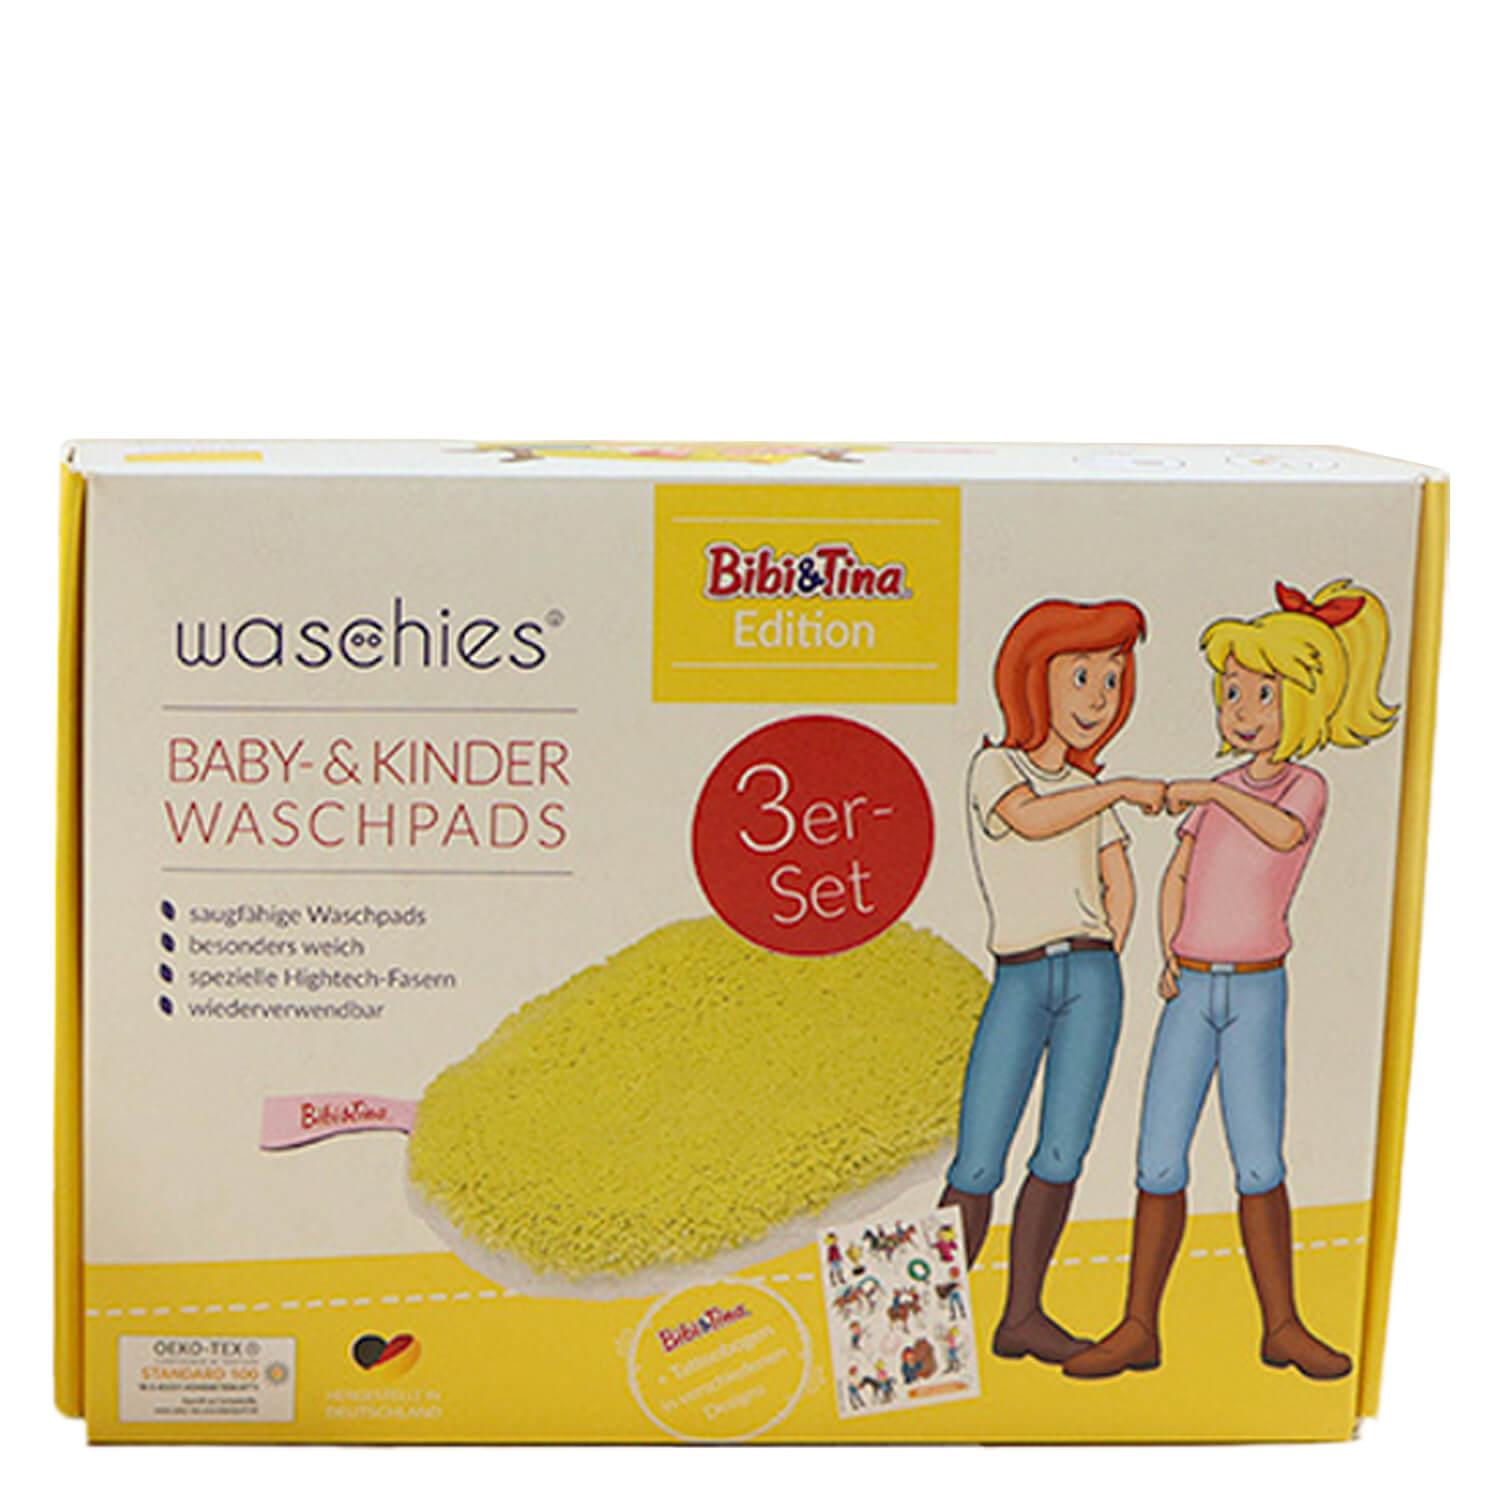 Waschies Kidsline - wash pads for kids Bibi&Tina Yellow Edition